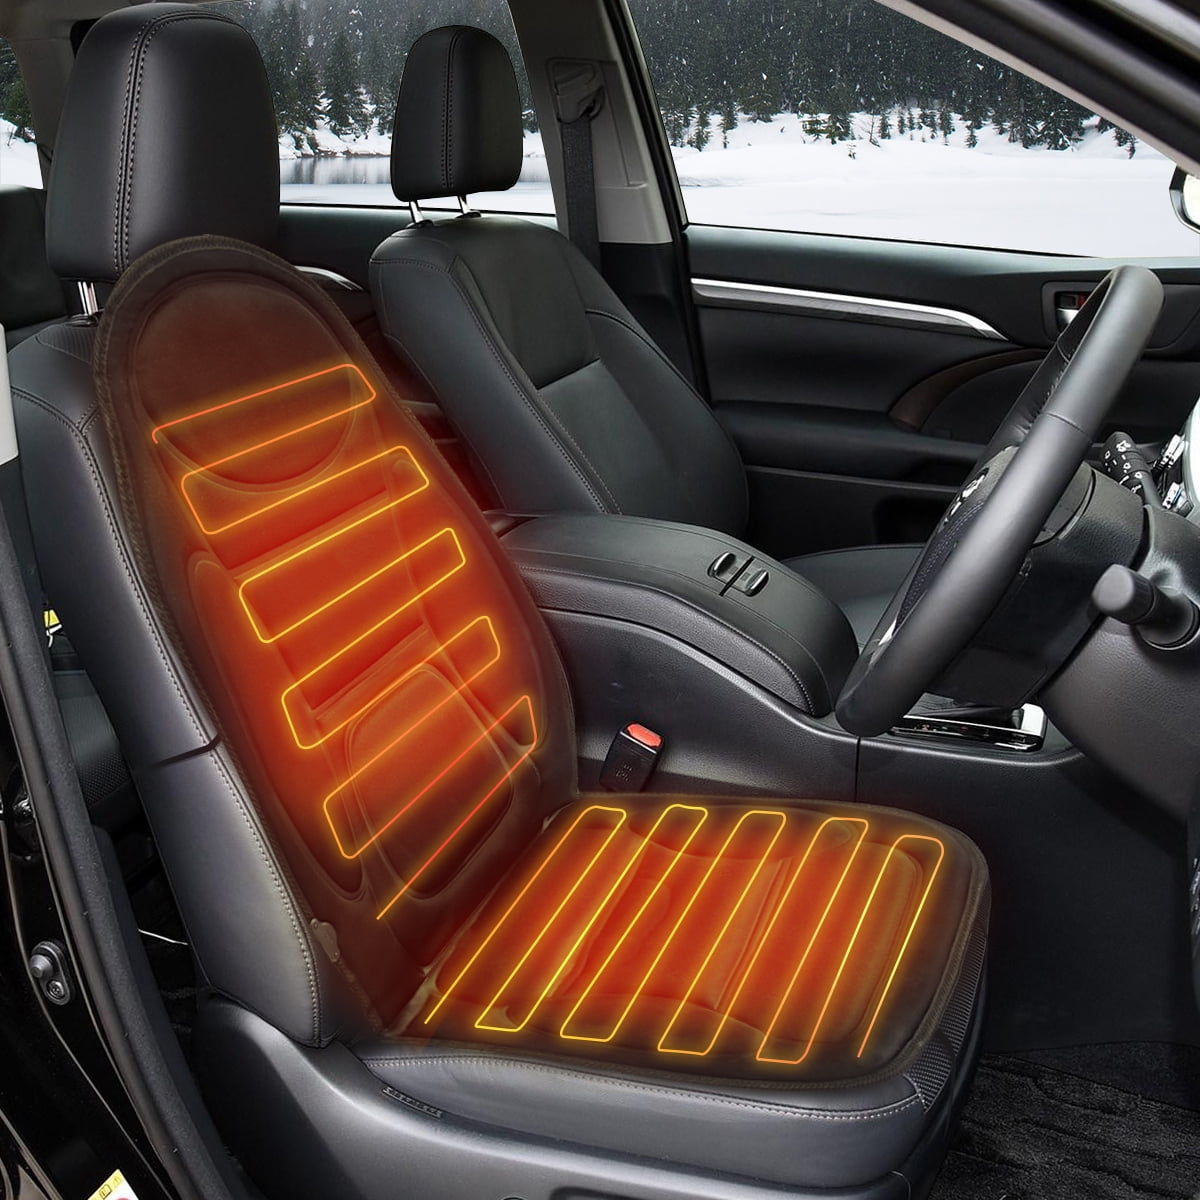 YSH 12V Heated Car Seat Cushion Fiber Cover Mat Seat Heater Warmer Winter Cushion Cardriver Heated Seat Pad,Abeige 